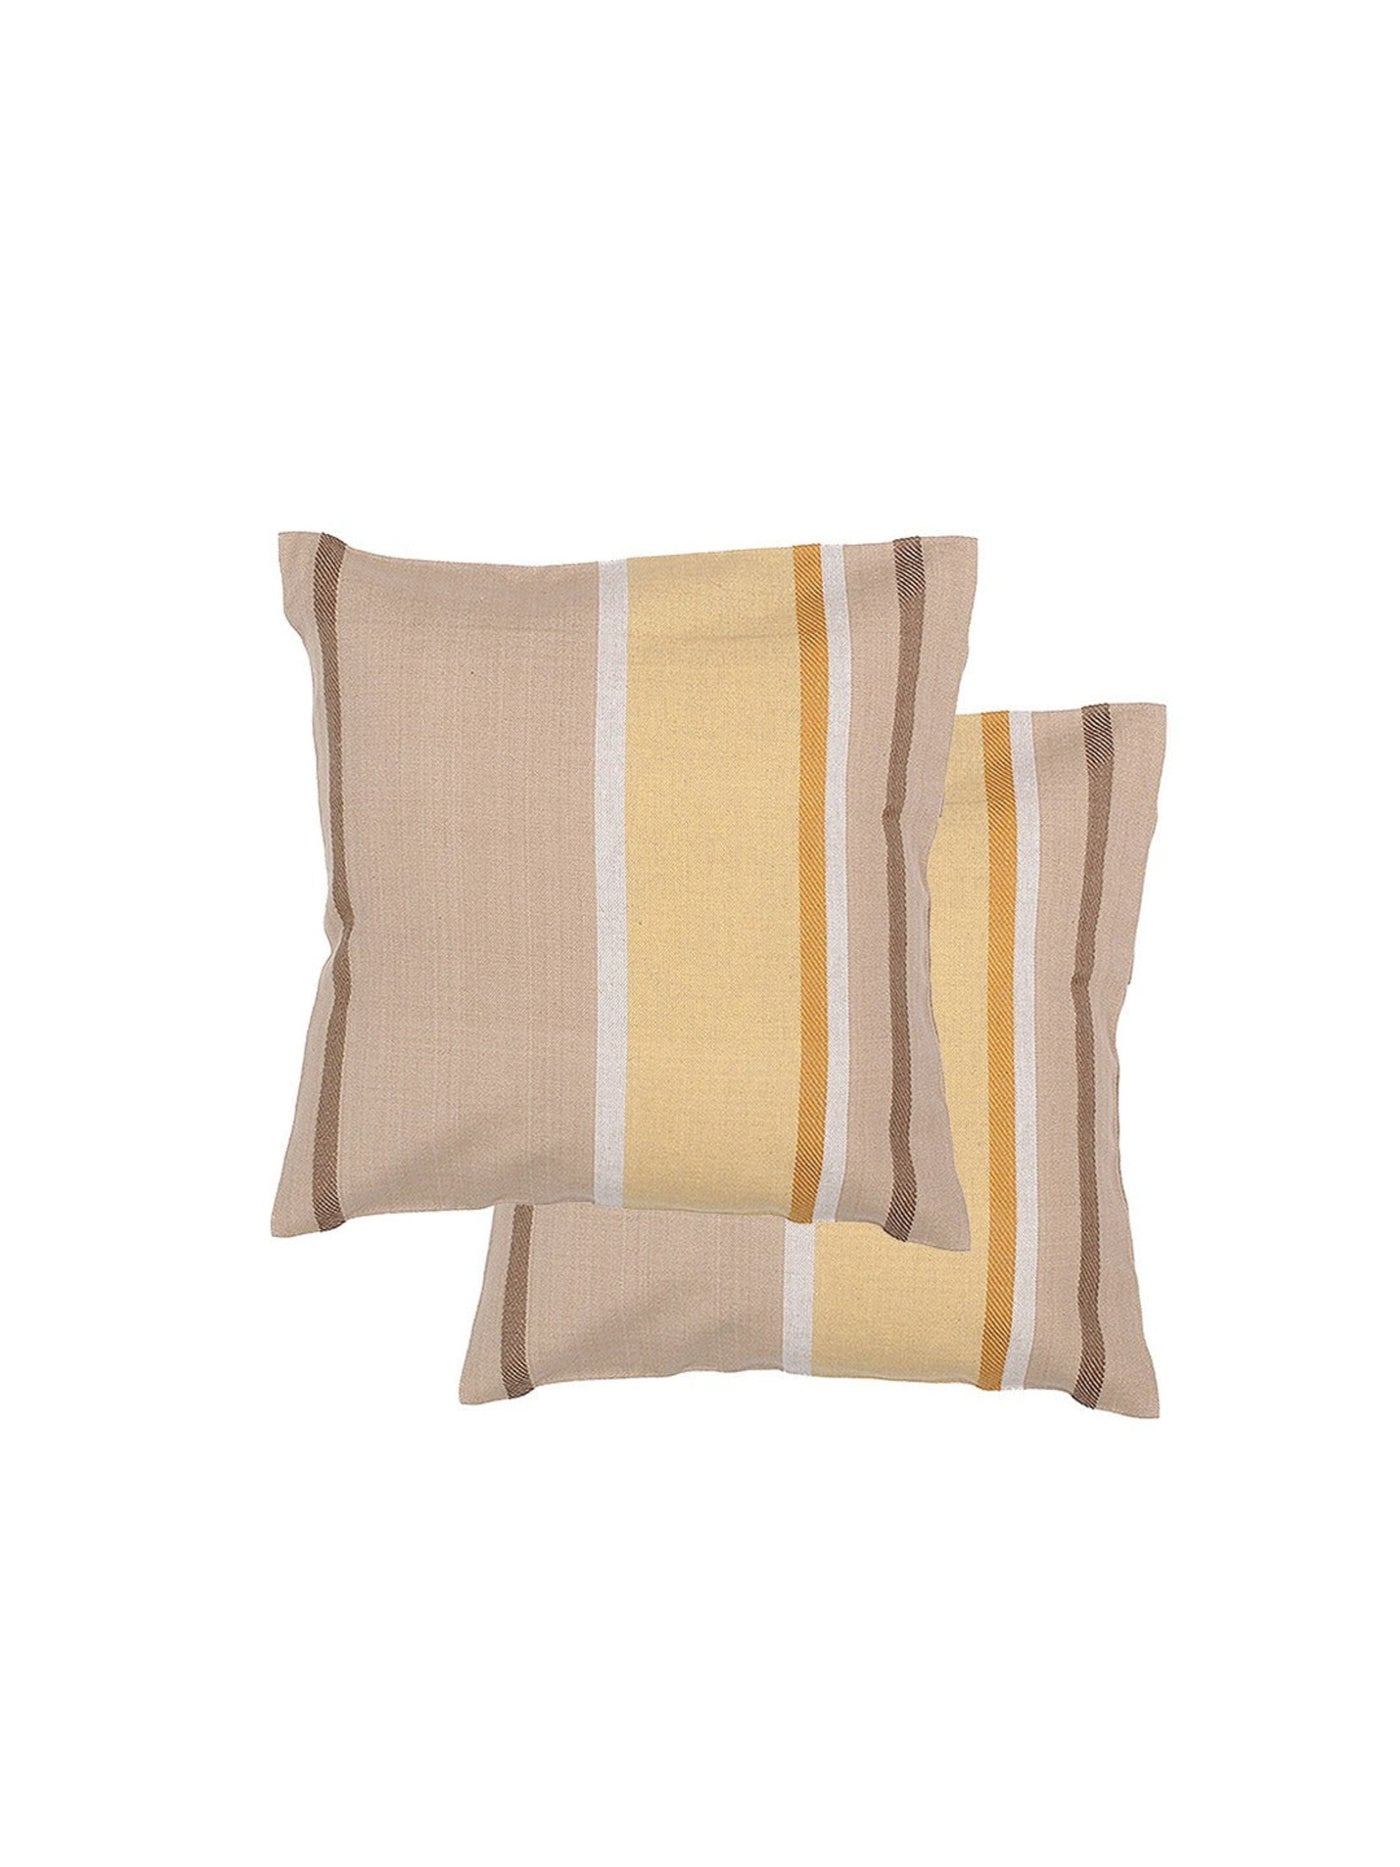 Cushion Cover - The Bar-Code Stripes 100% Cotton 2 s-Beige-8903773001040